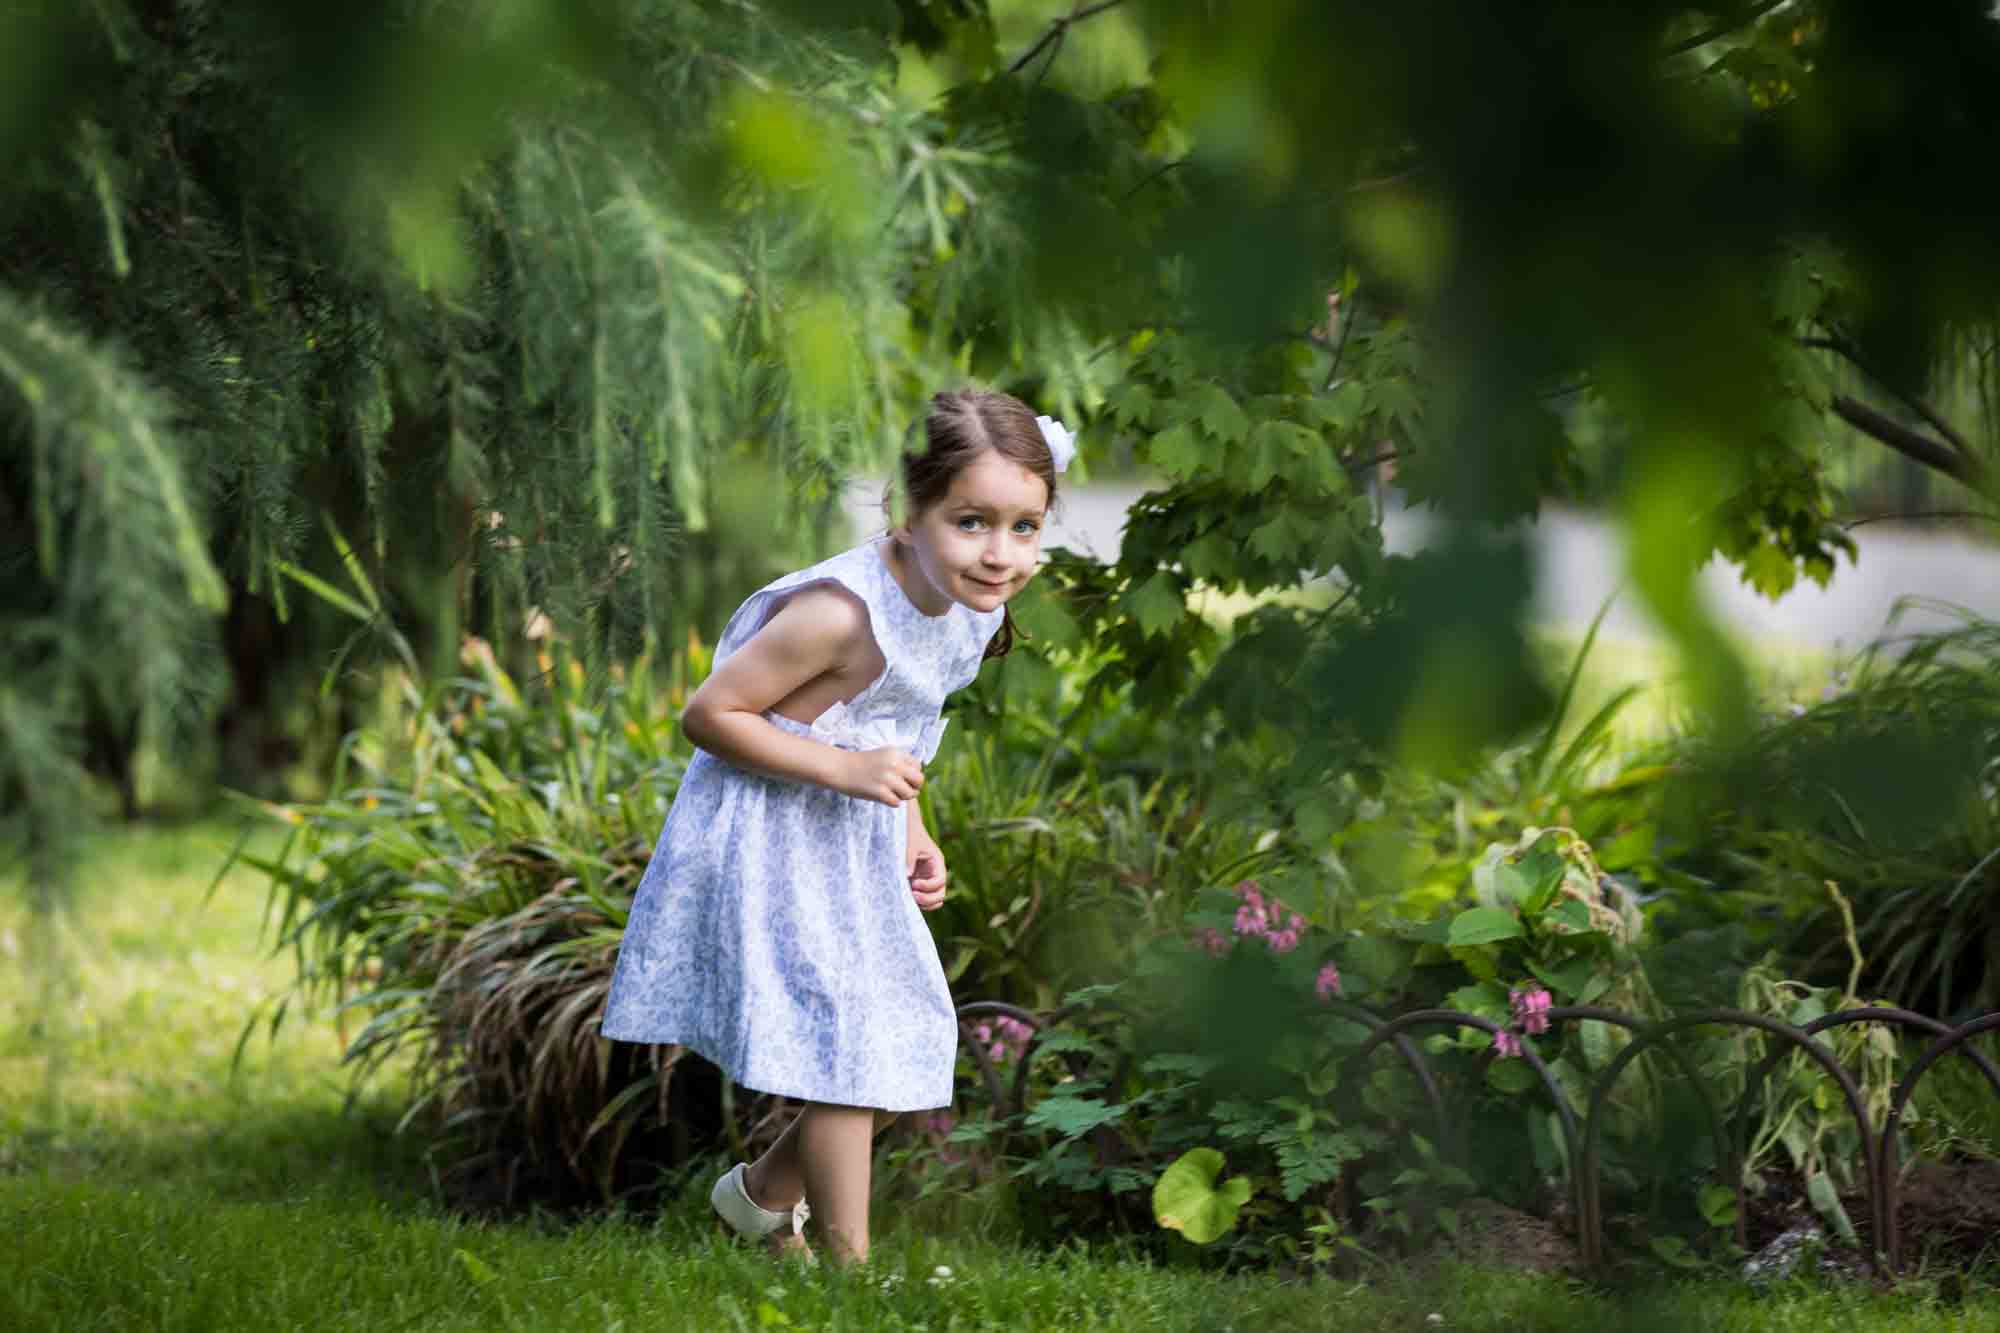 Little girl looking underneath tree limbs in park